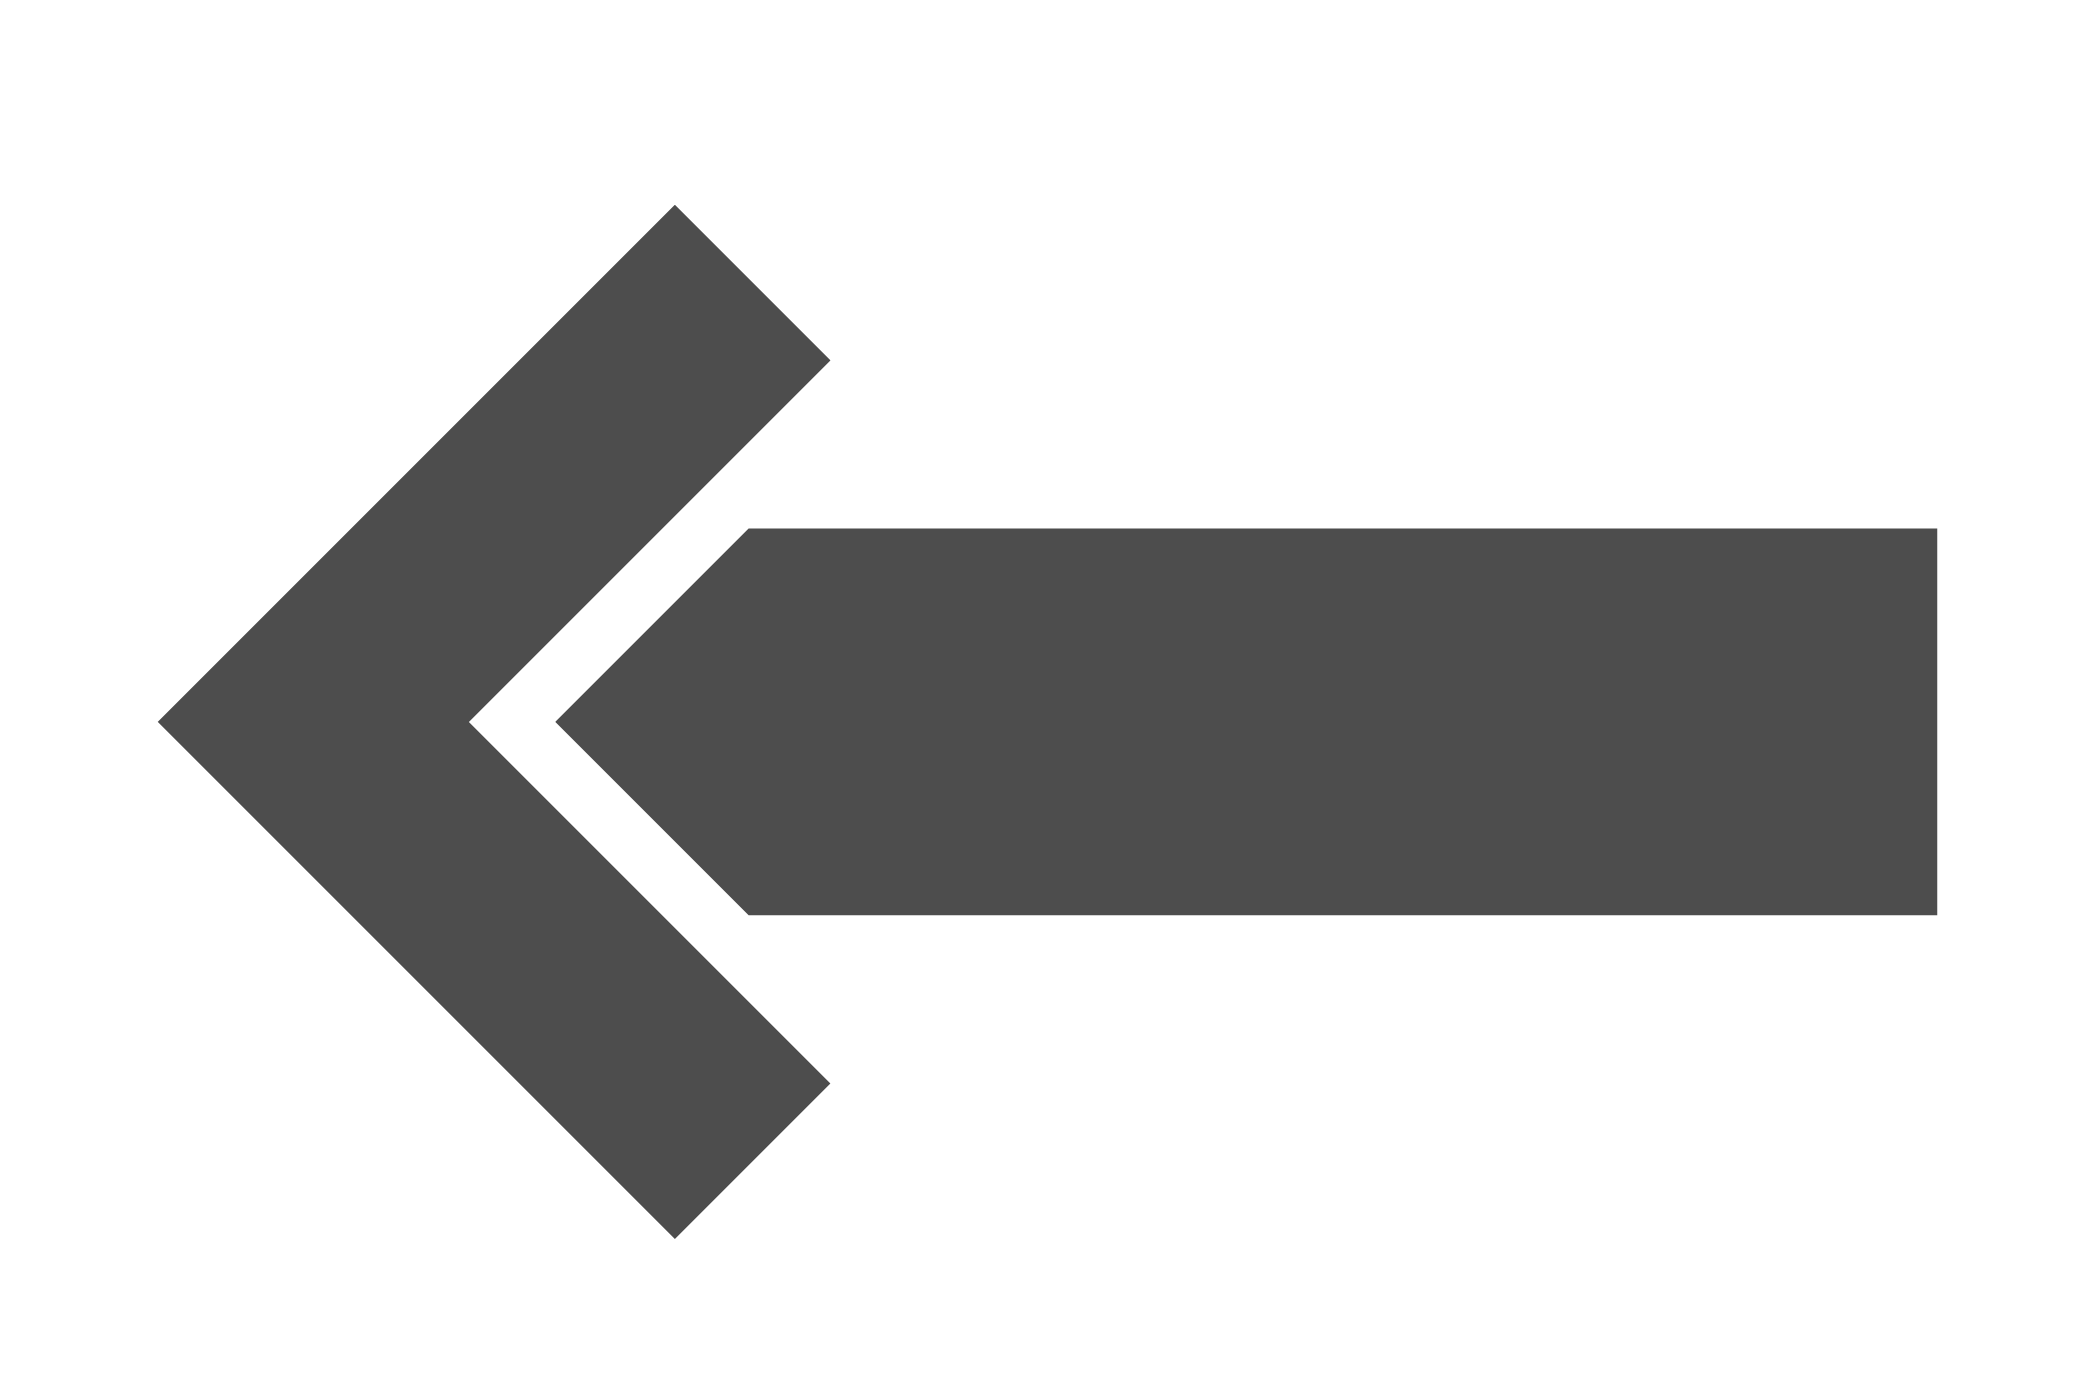 Icon set / Illustration / Internet arrow / Direction / Forward / Clip art / Vector / Beju curve / ai file / Edit